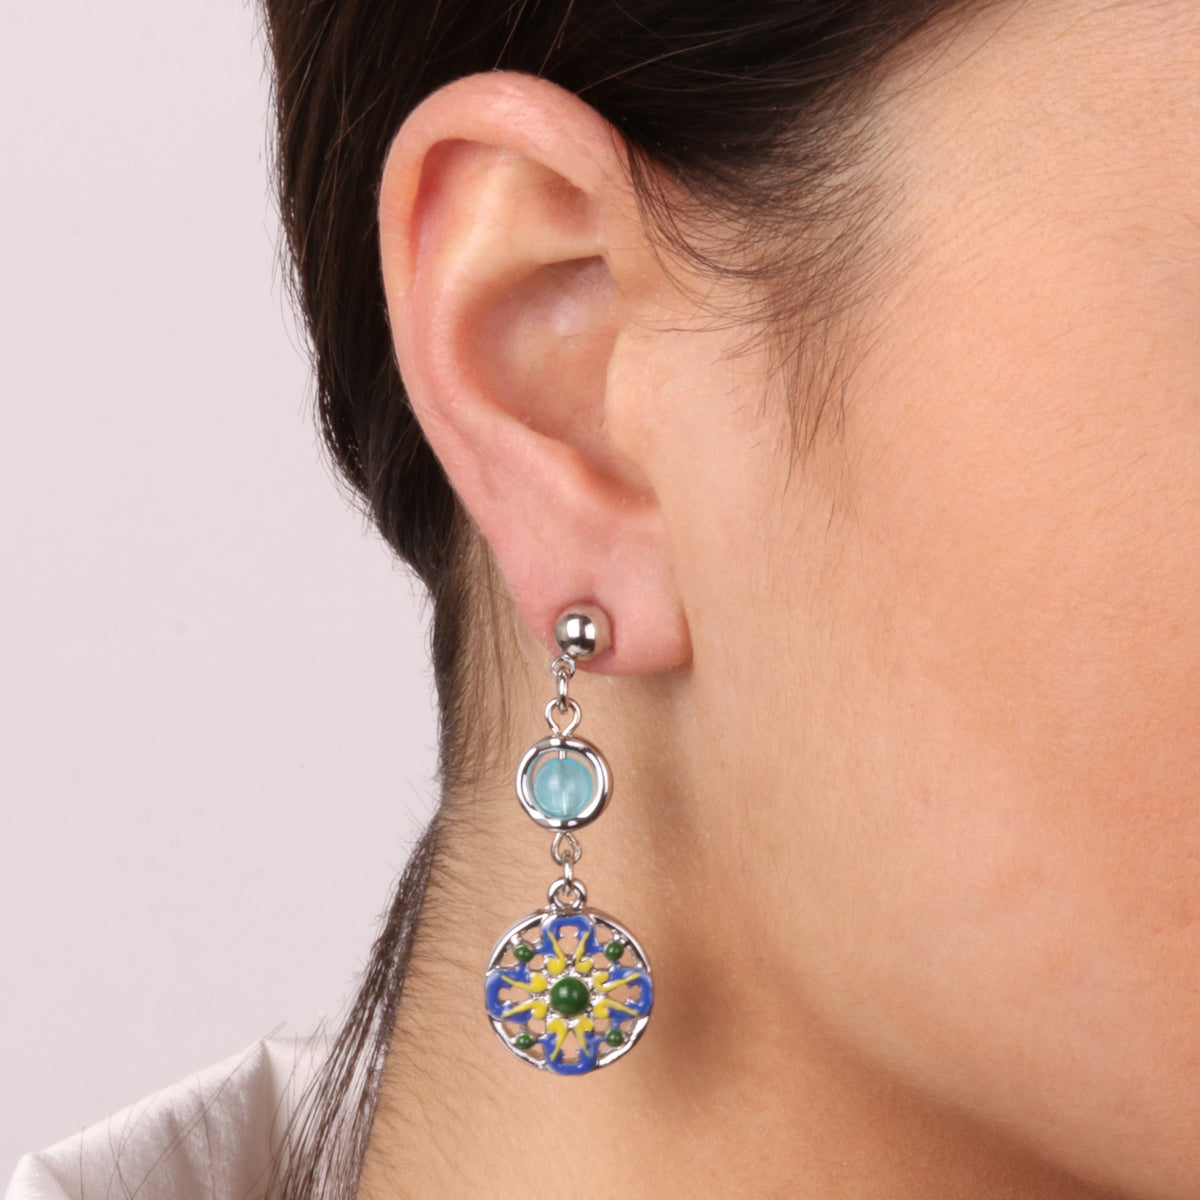 Metal earrings with majolica pendant